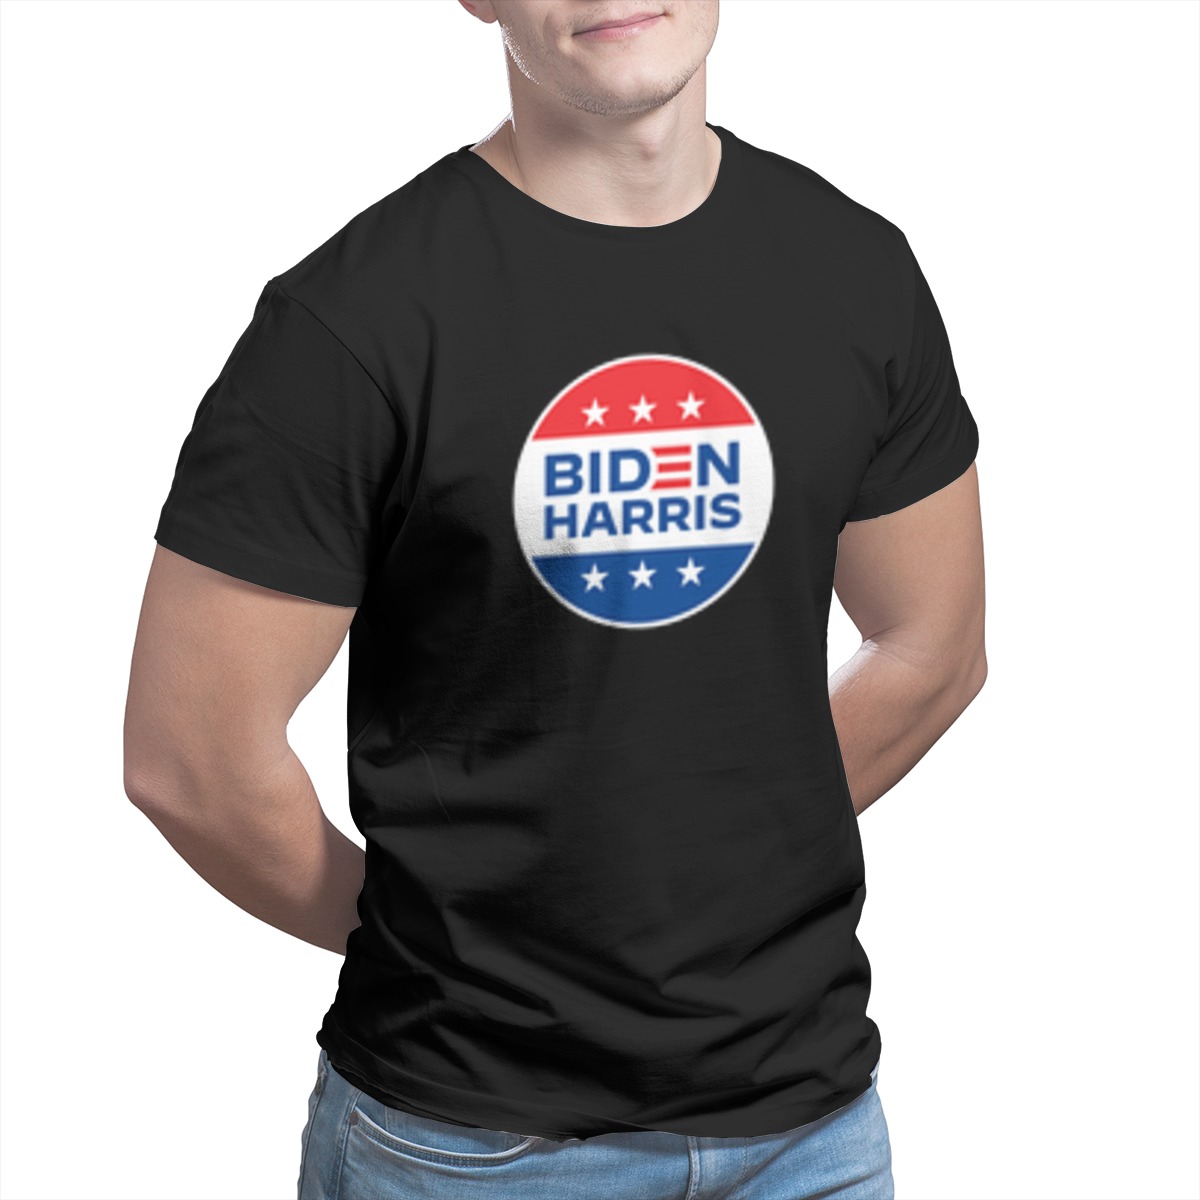 Biden Harris Tee Men's T Shirt Novelty Tops Bitumen Bike Life Tees Clothes Cotton Printed T-Shirt Plus Size Clothing 3308